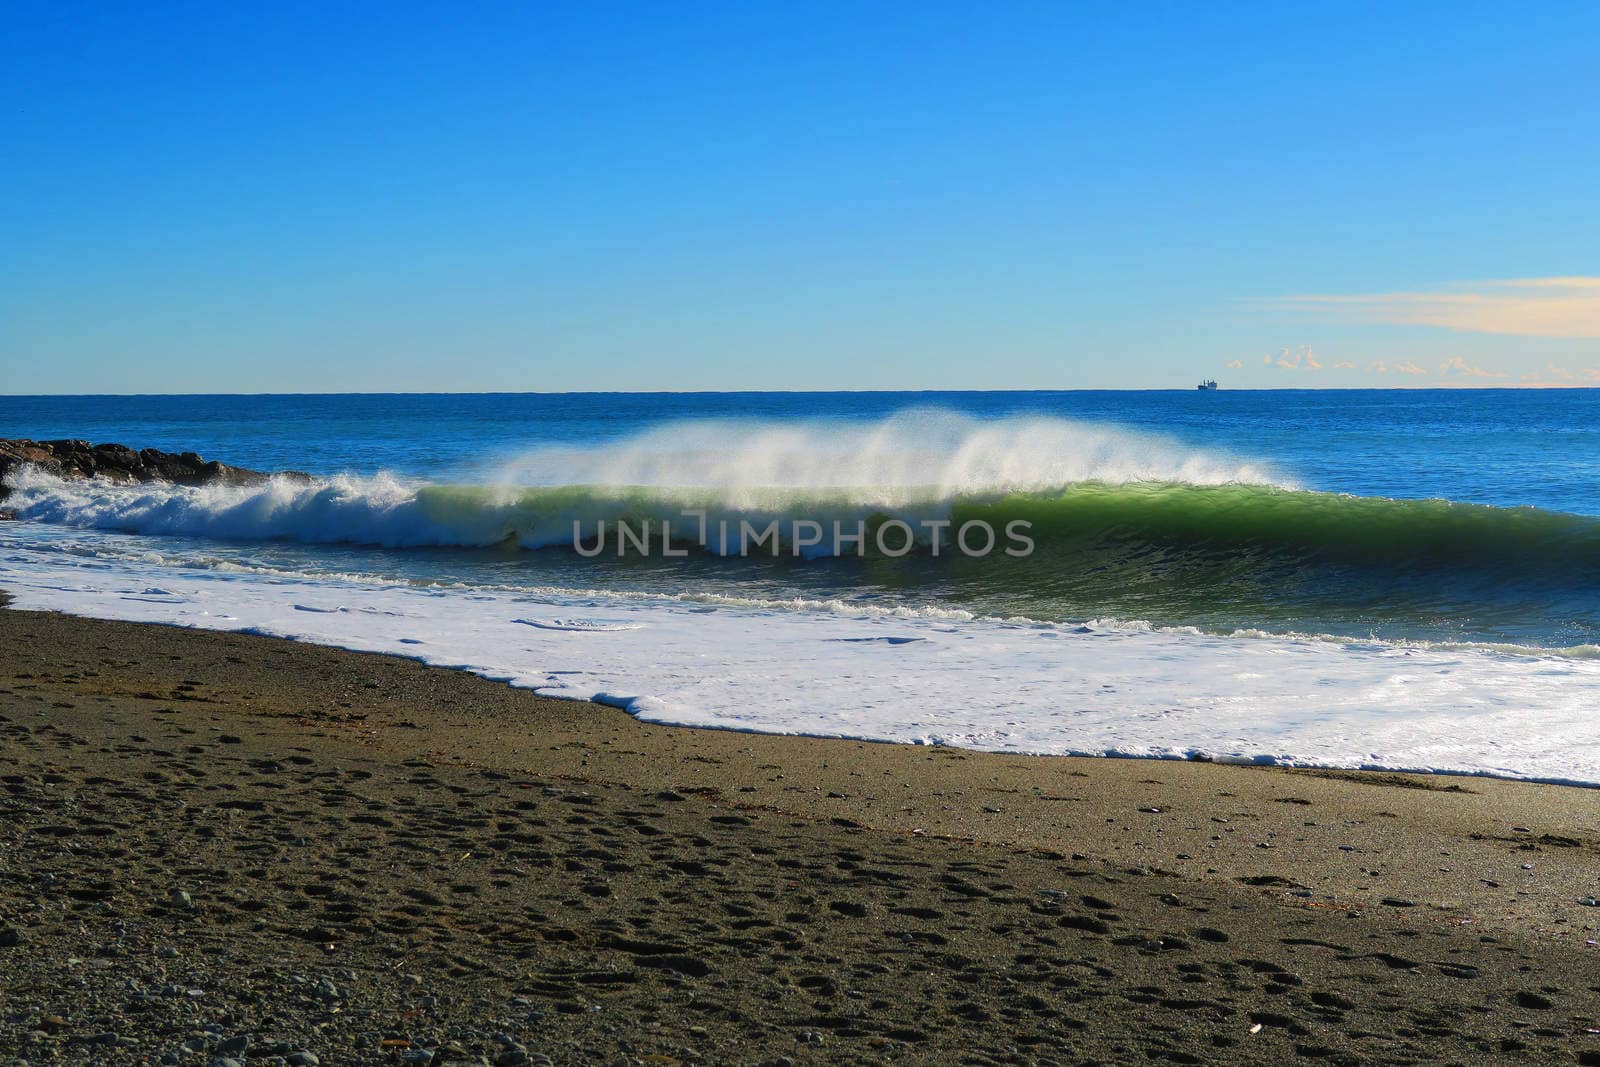 Beautiful wave on the beach in Savona, Liguria,Italy